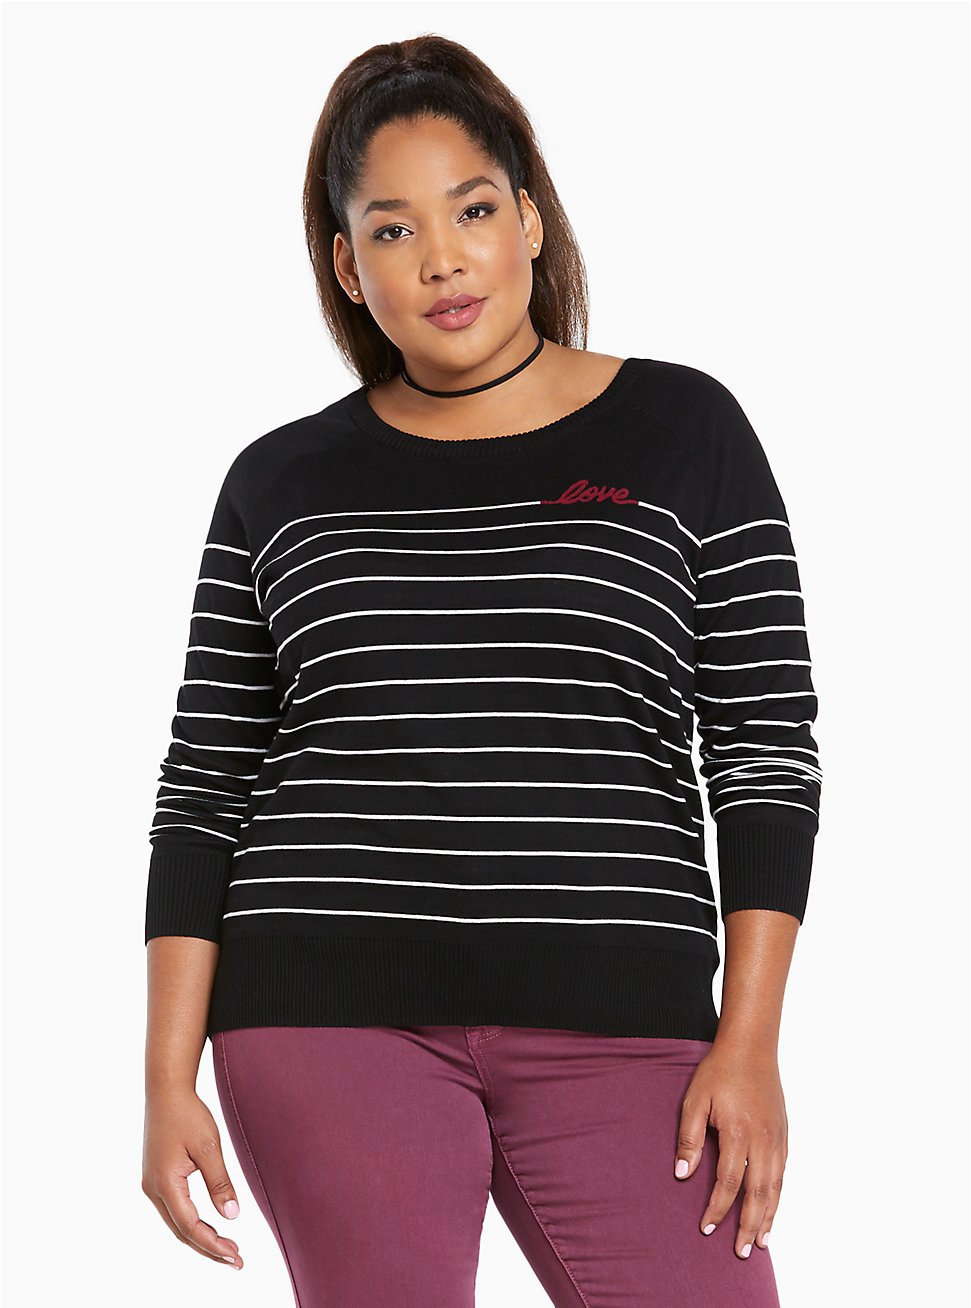 Plus Size - Striped Love Raglan Sweater - Torrid